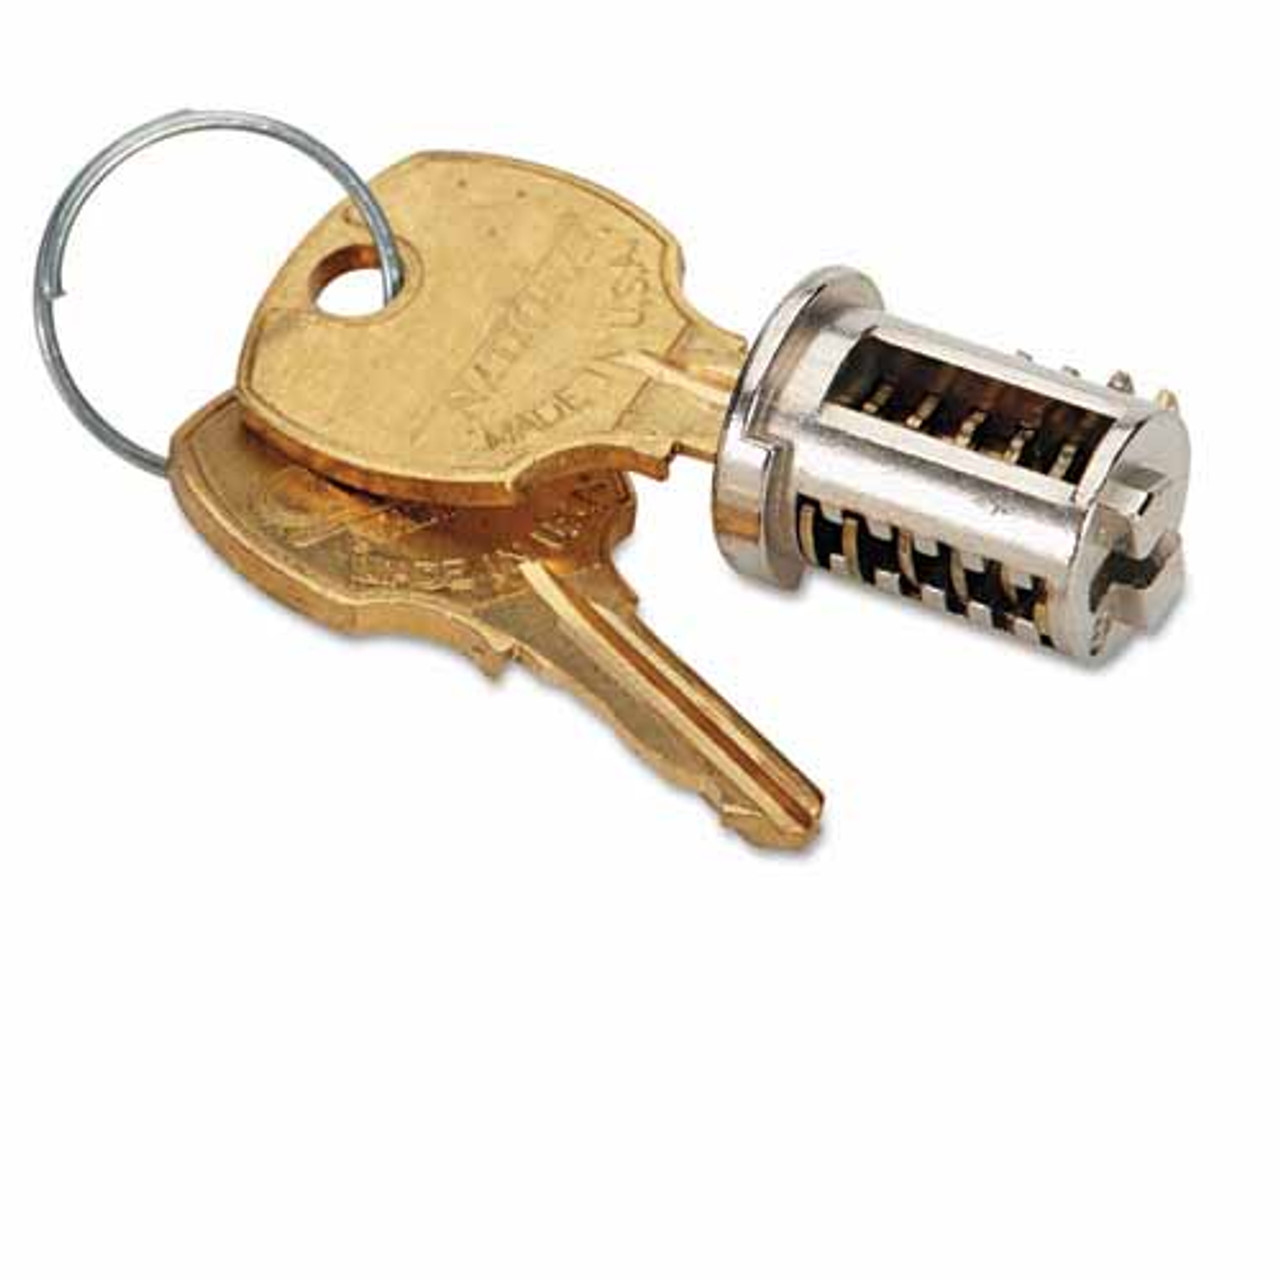 Filing Cabinet Lost Keys Replaced - Georgia - Atlanta ID1535863